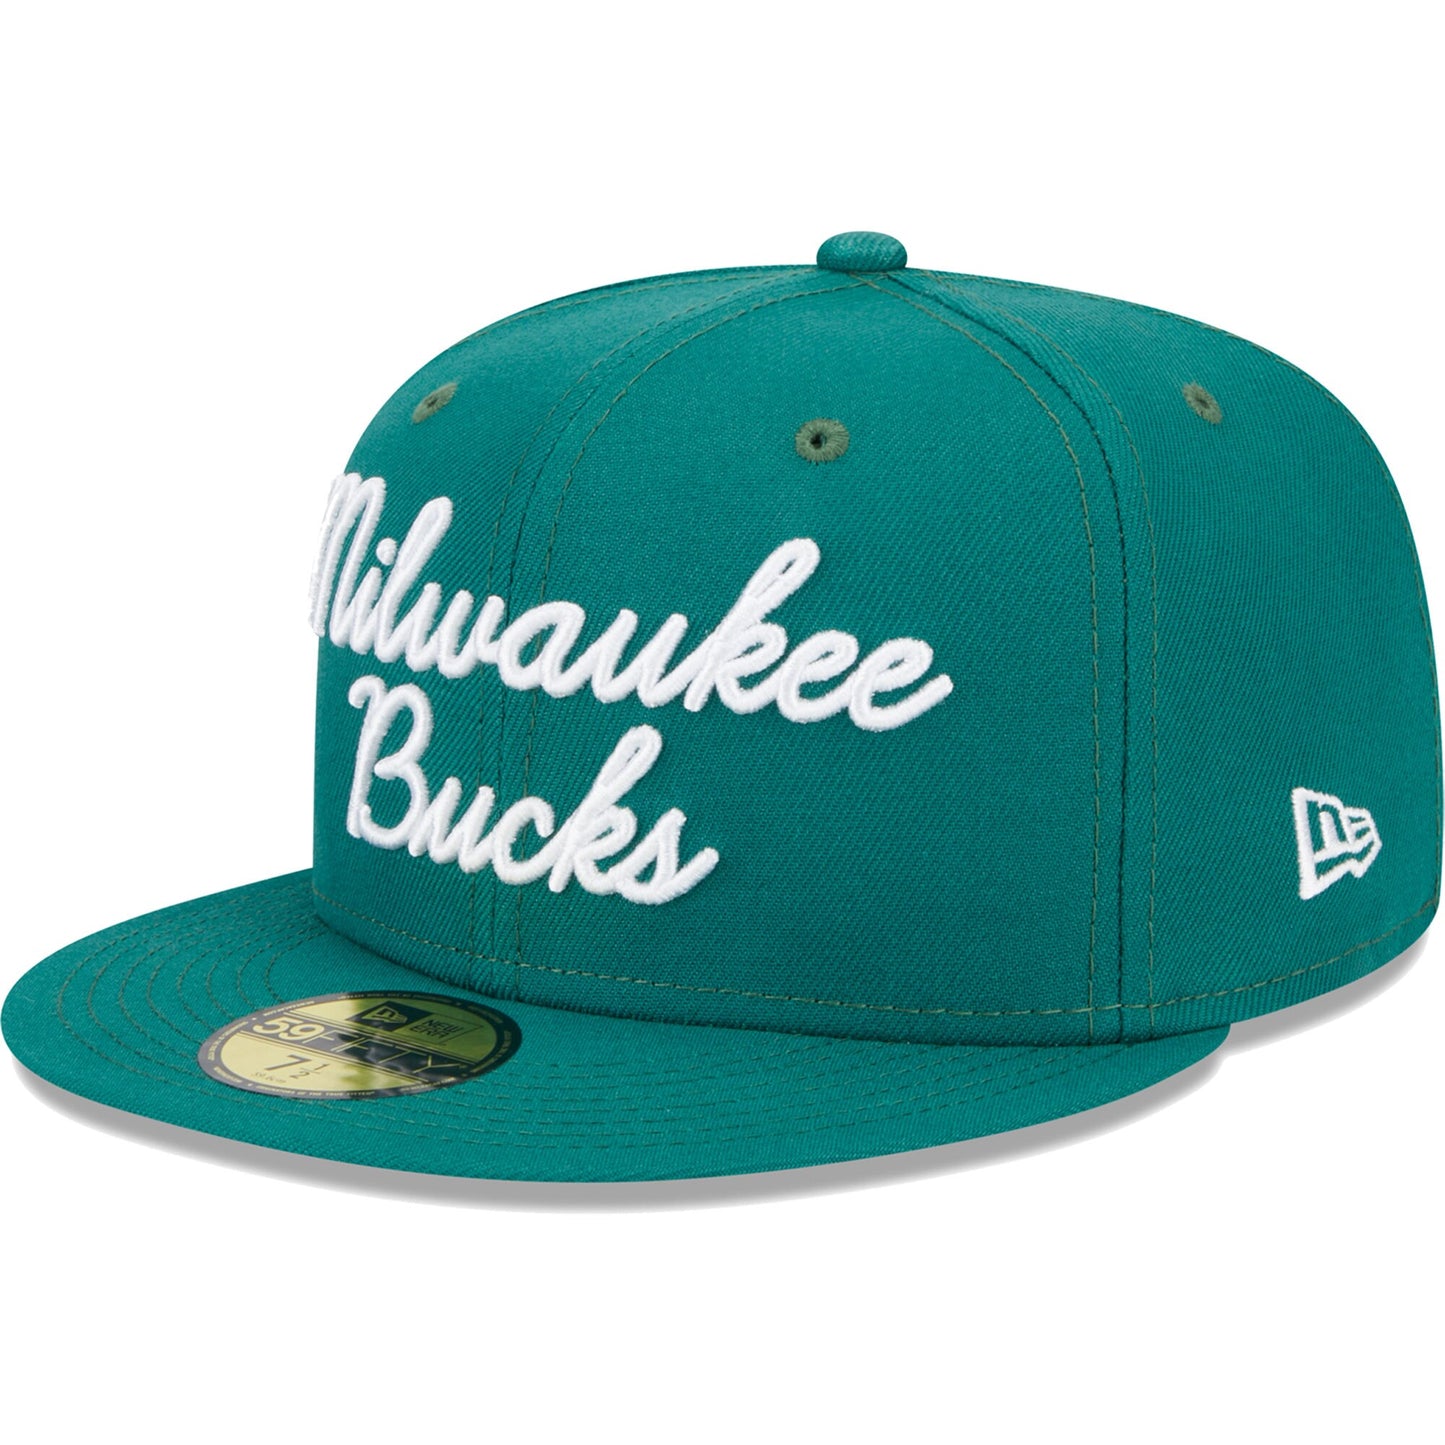 Milwaukee Bucks New Era Script 59FIFTY Fitted Hat - Augusta Green